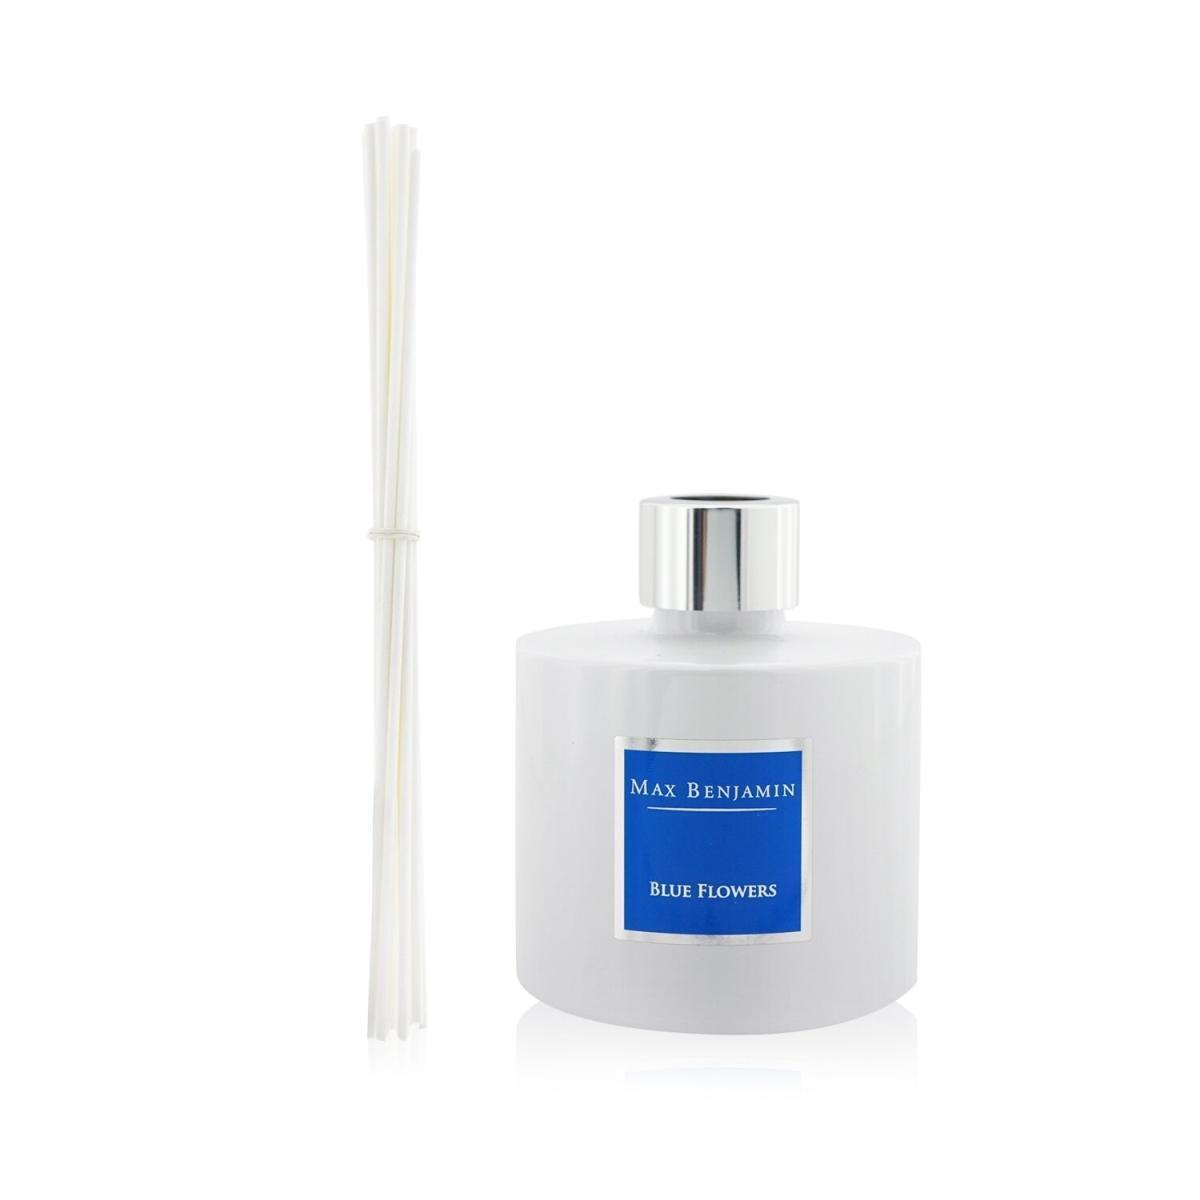 Max Benjamin 262162 4.95 oz Home Perfume Diffuser, Blue Flowers